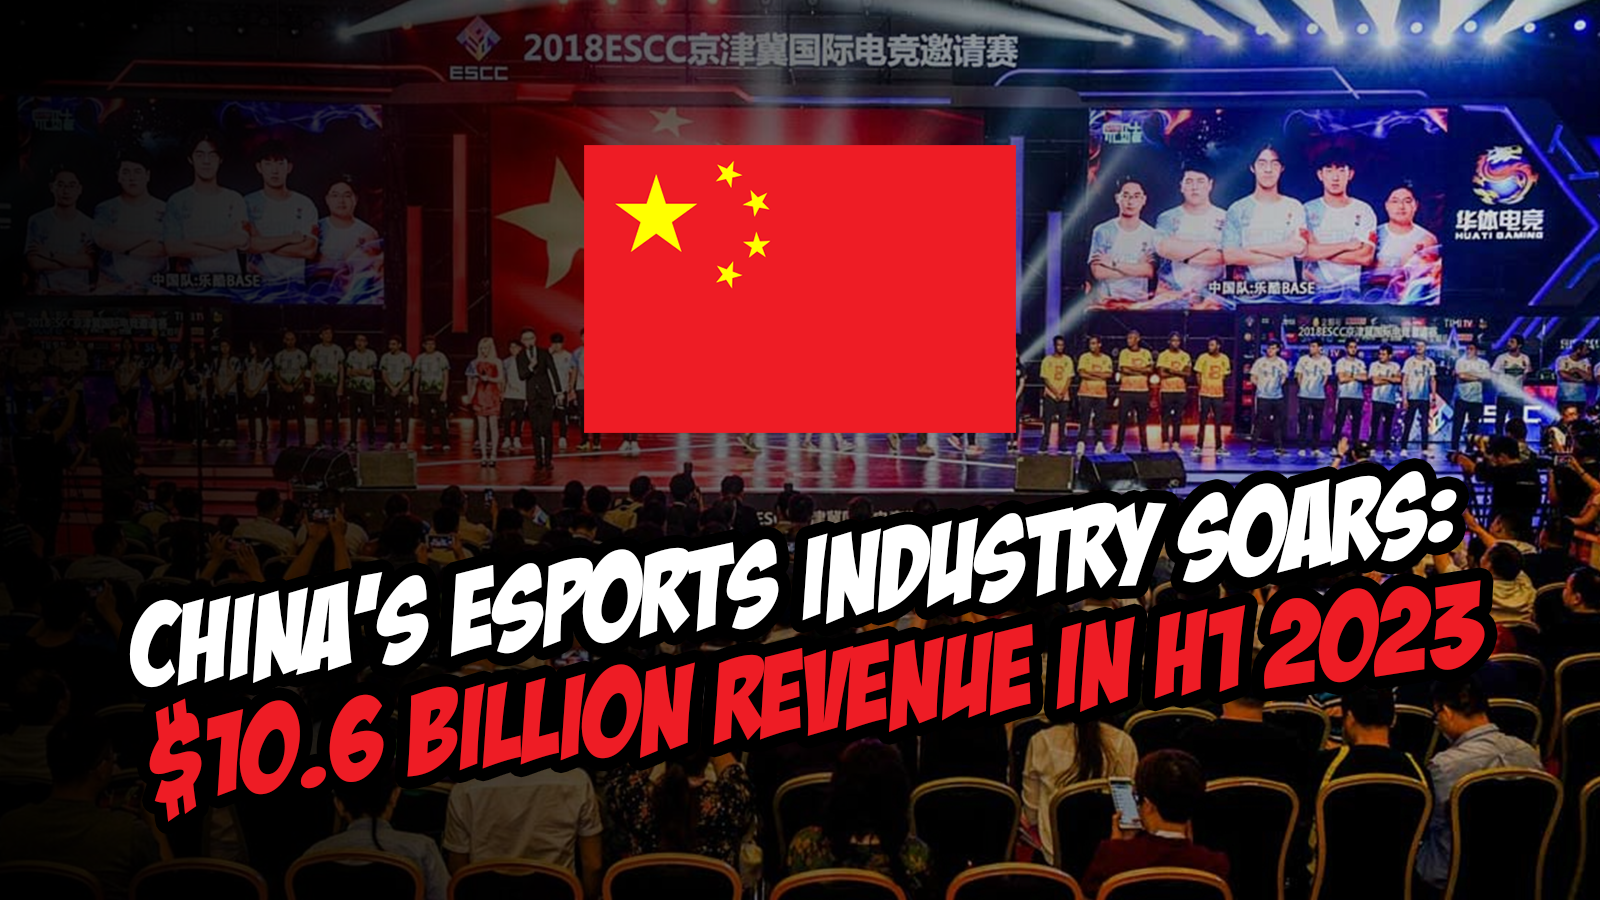 China’s Esports Industry Soars: $10.6 Billion Revenue in H1 2023